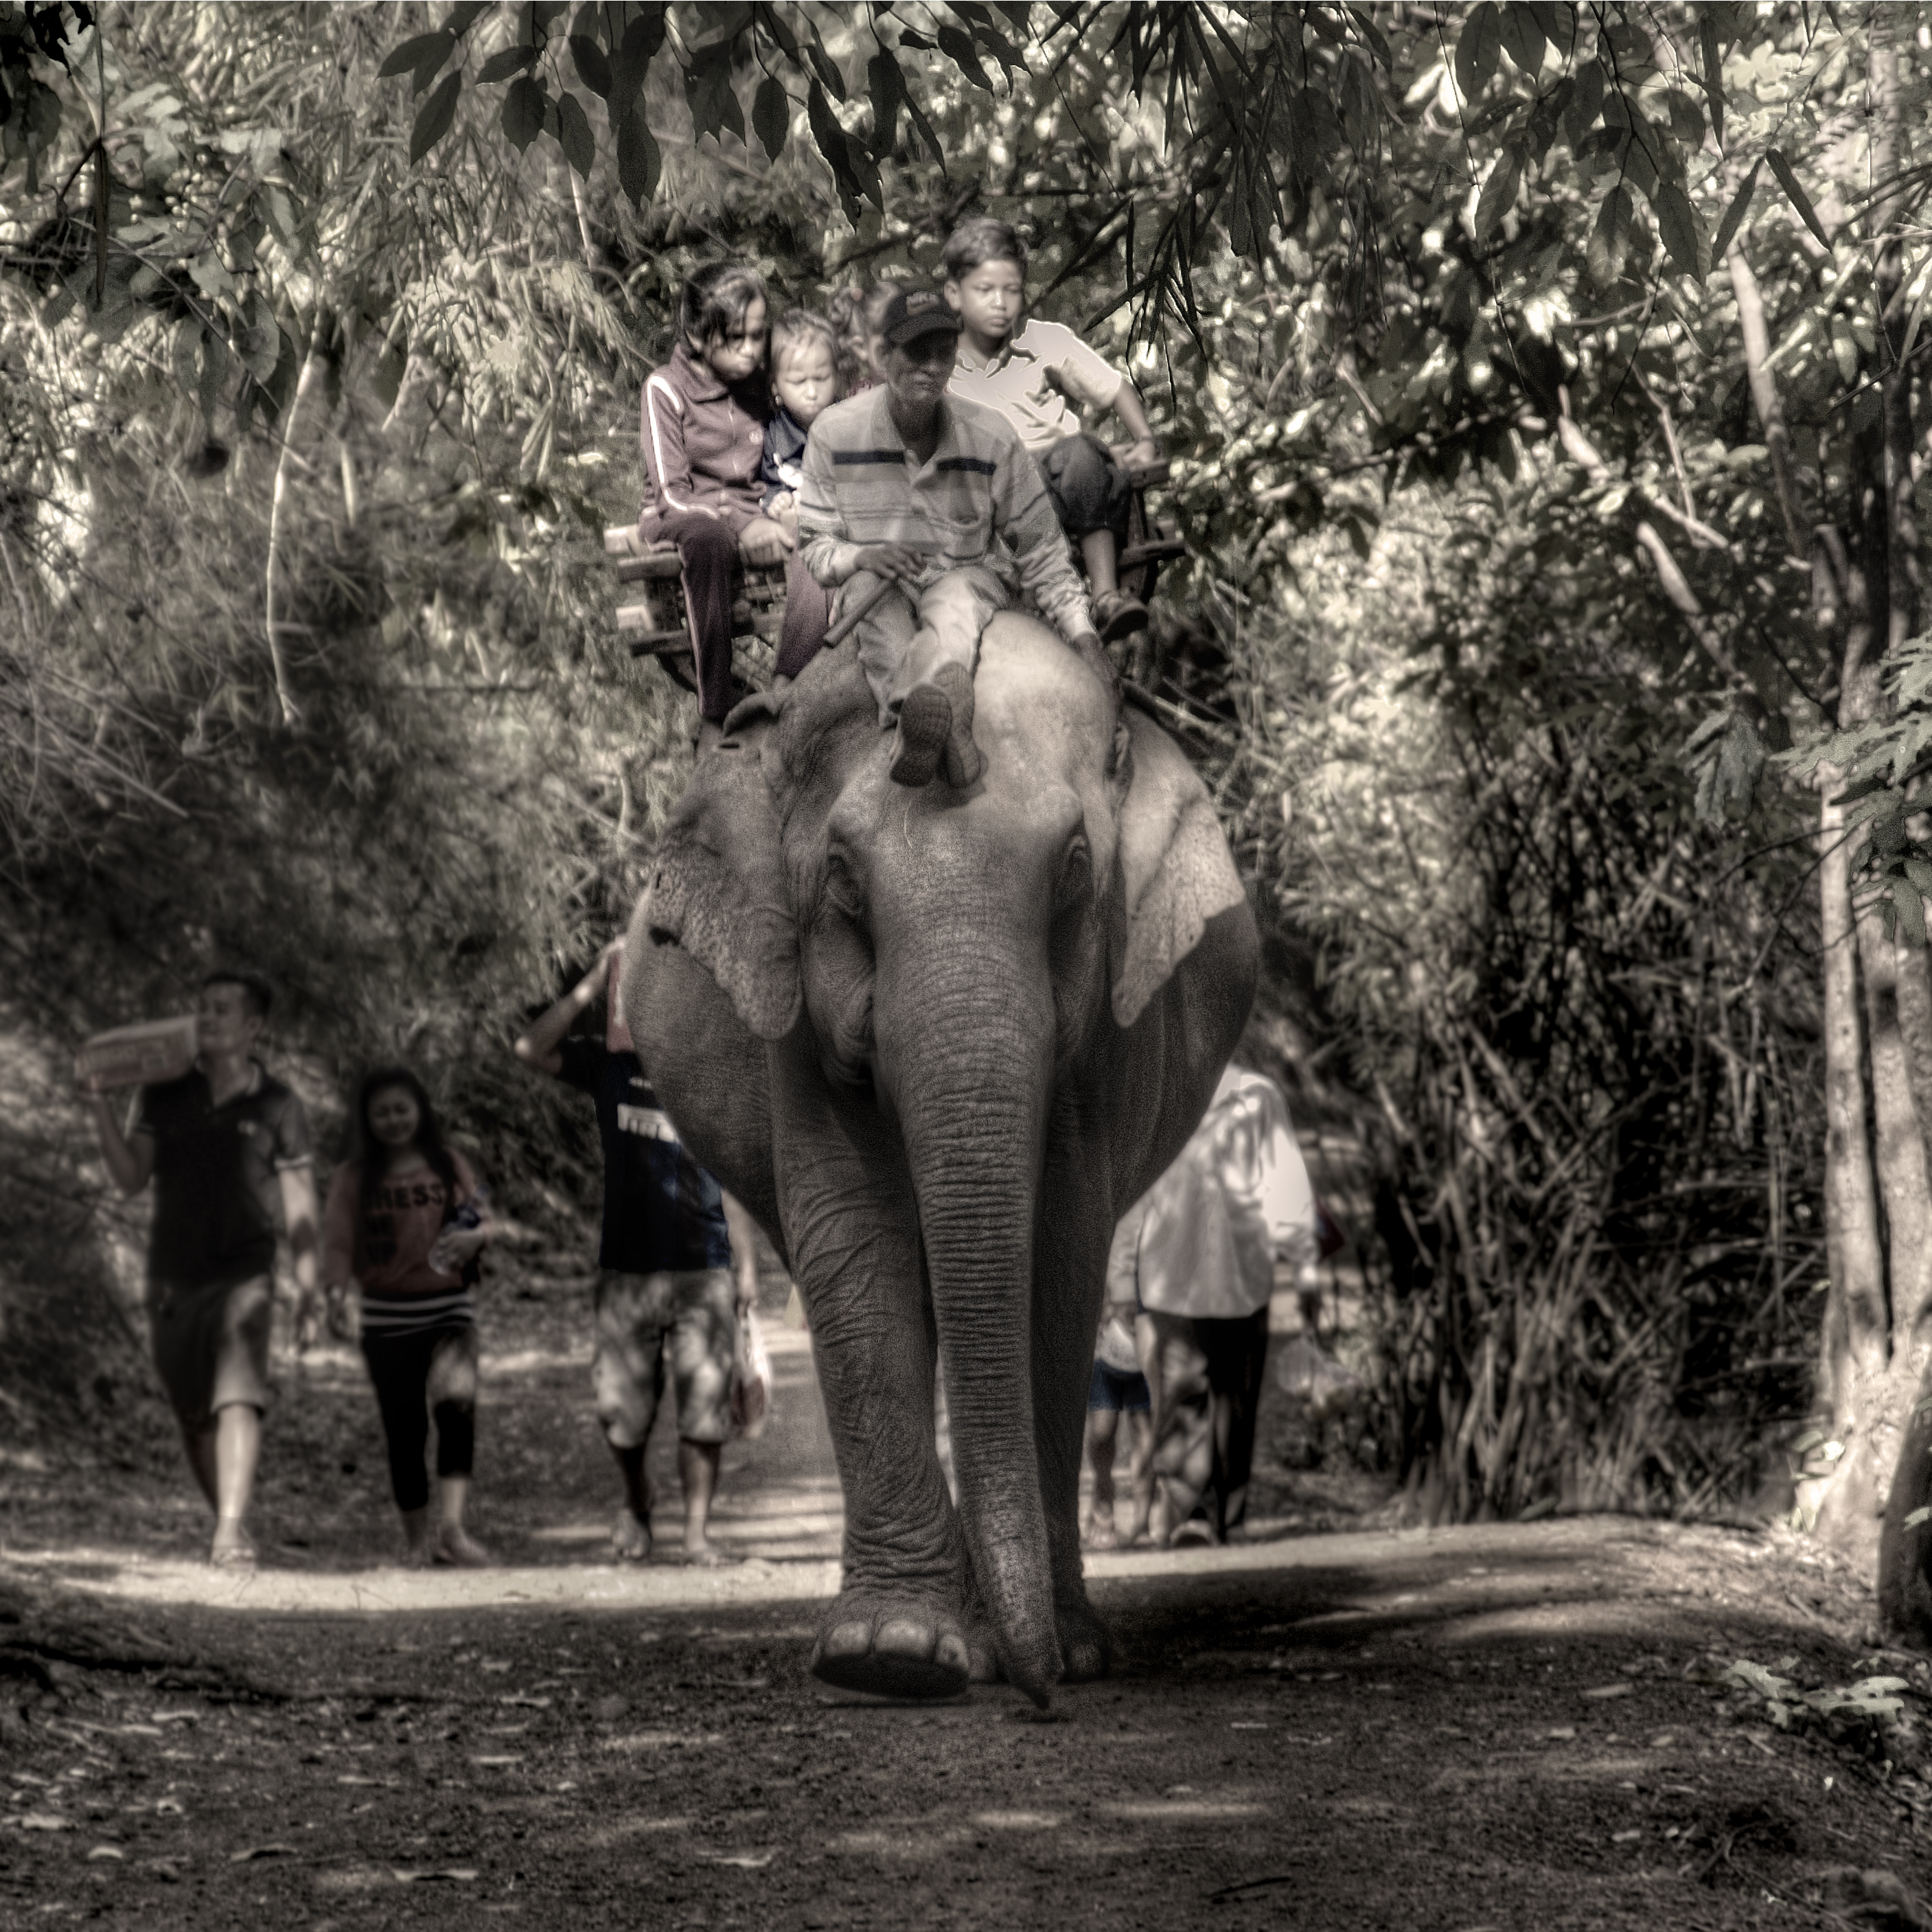 riding an elephant down a jungle path